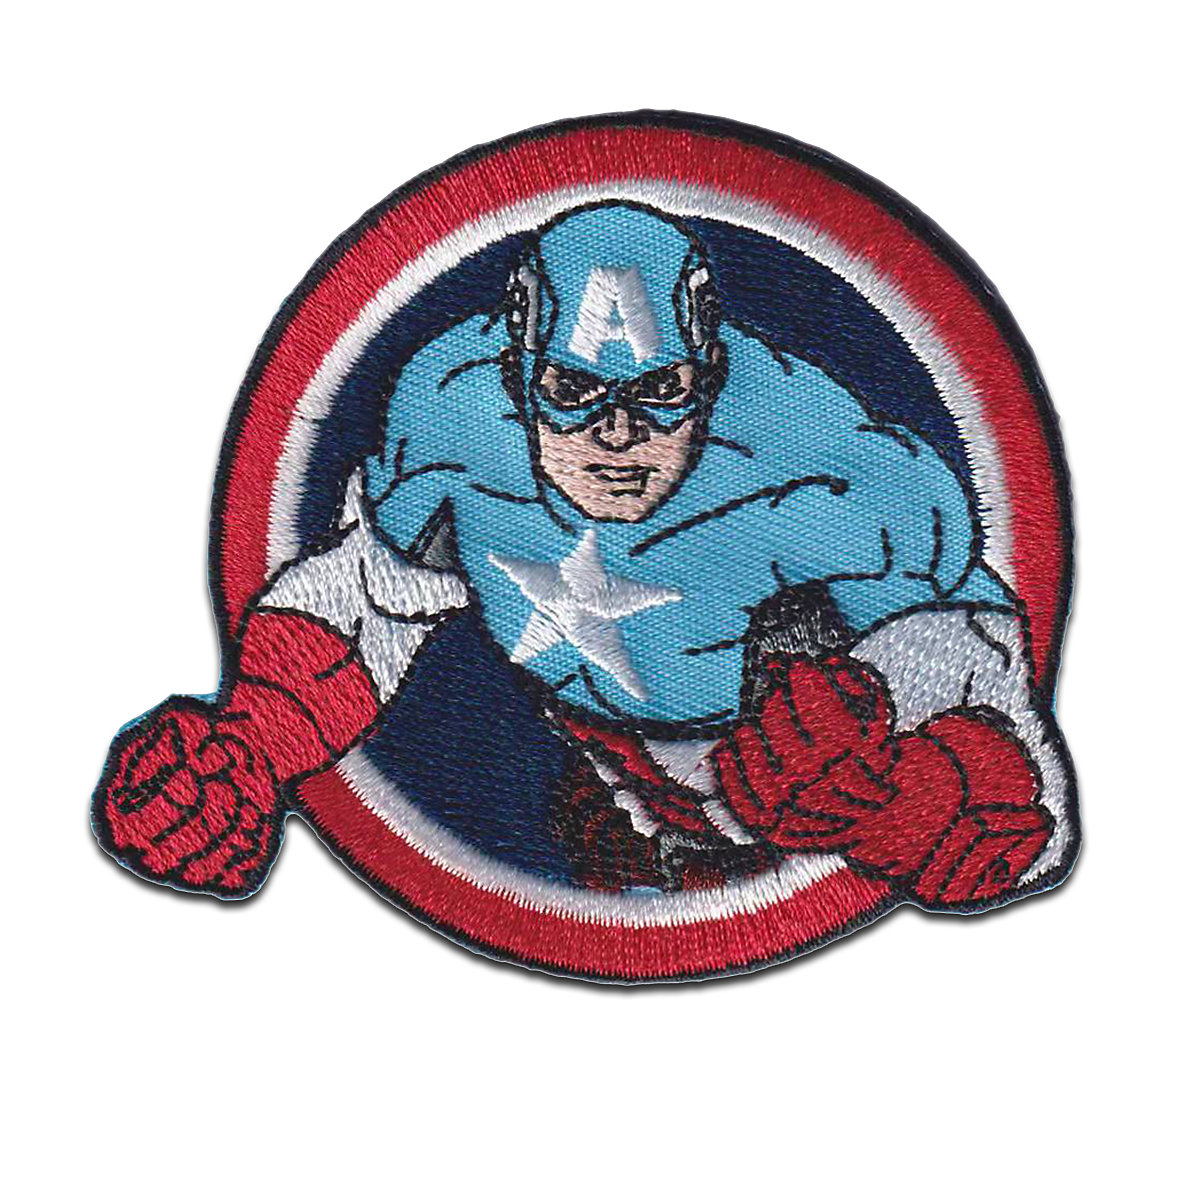 Aufnäher / Bügelbild Marvel Avengers Captain America Button Nähsets für Kinder